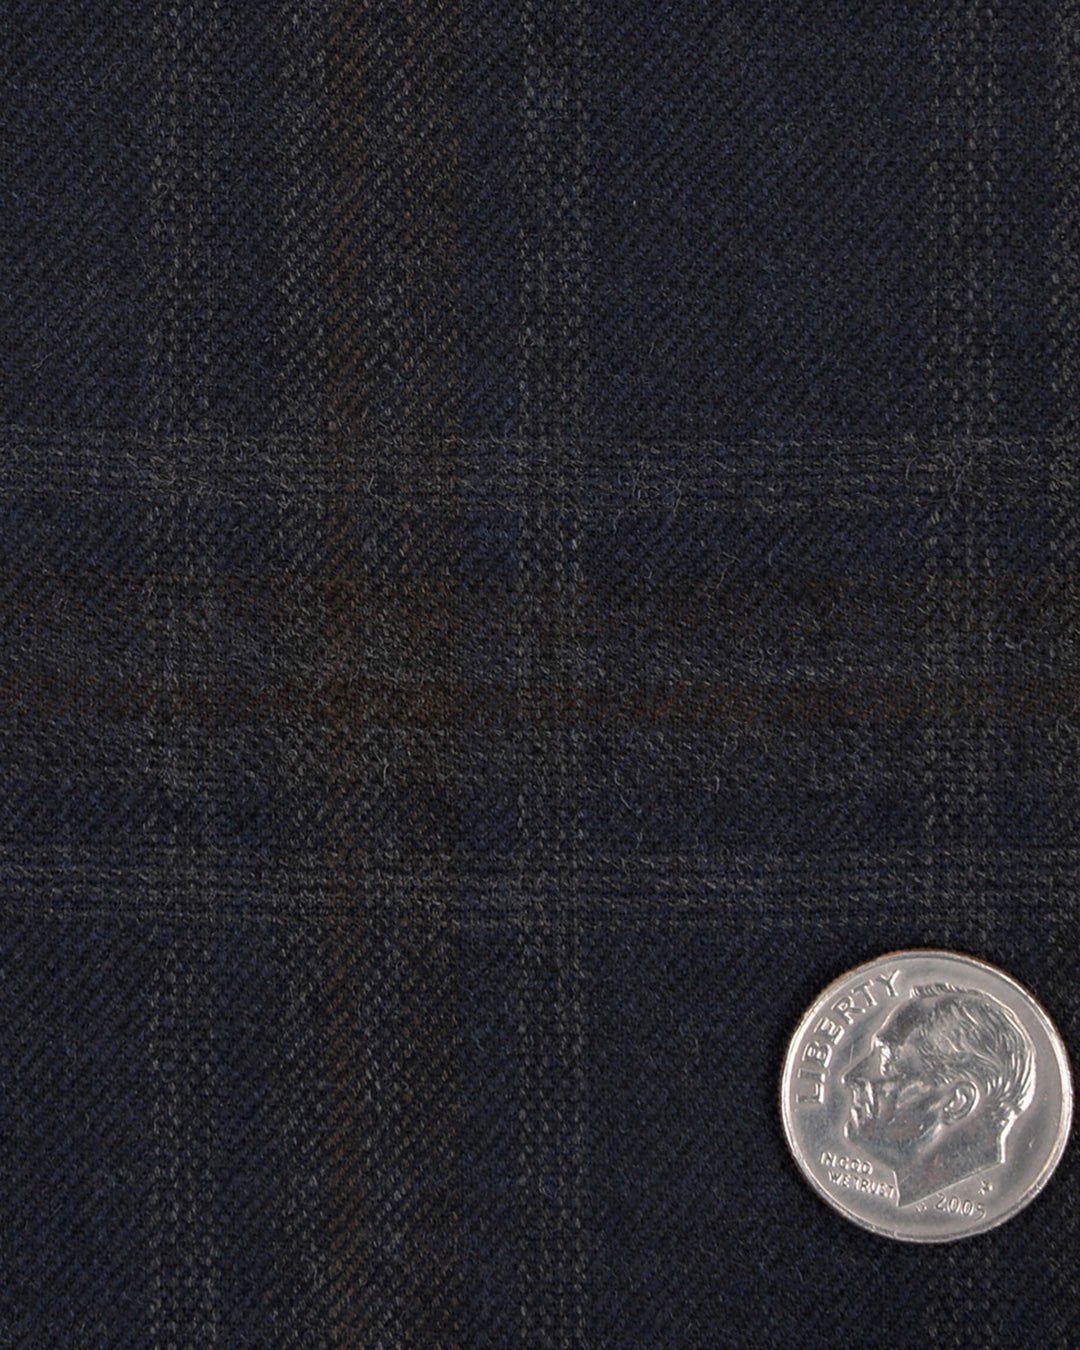 EThomas Wool Cashmere: Dark Blue Tartan  Jacket